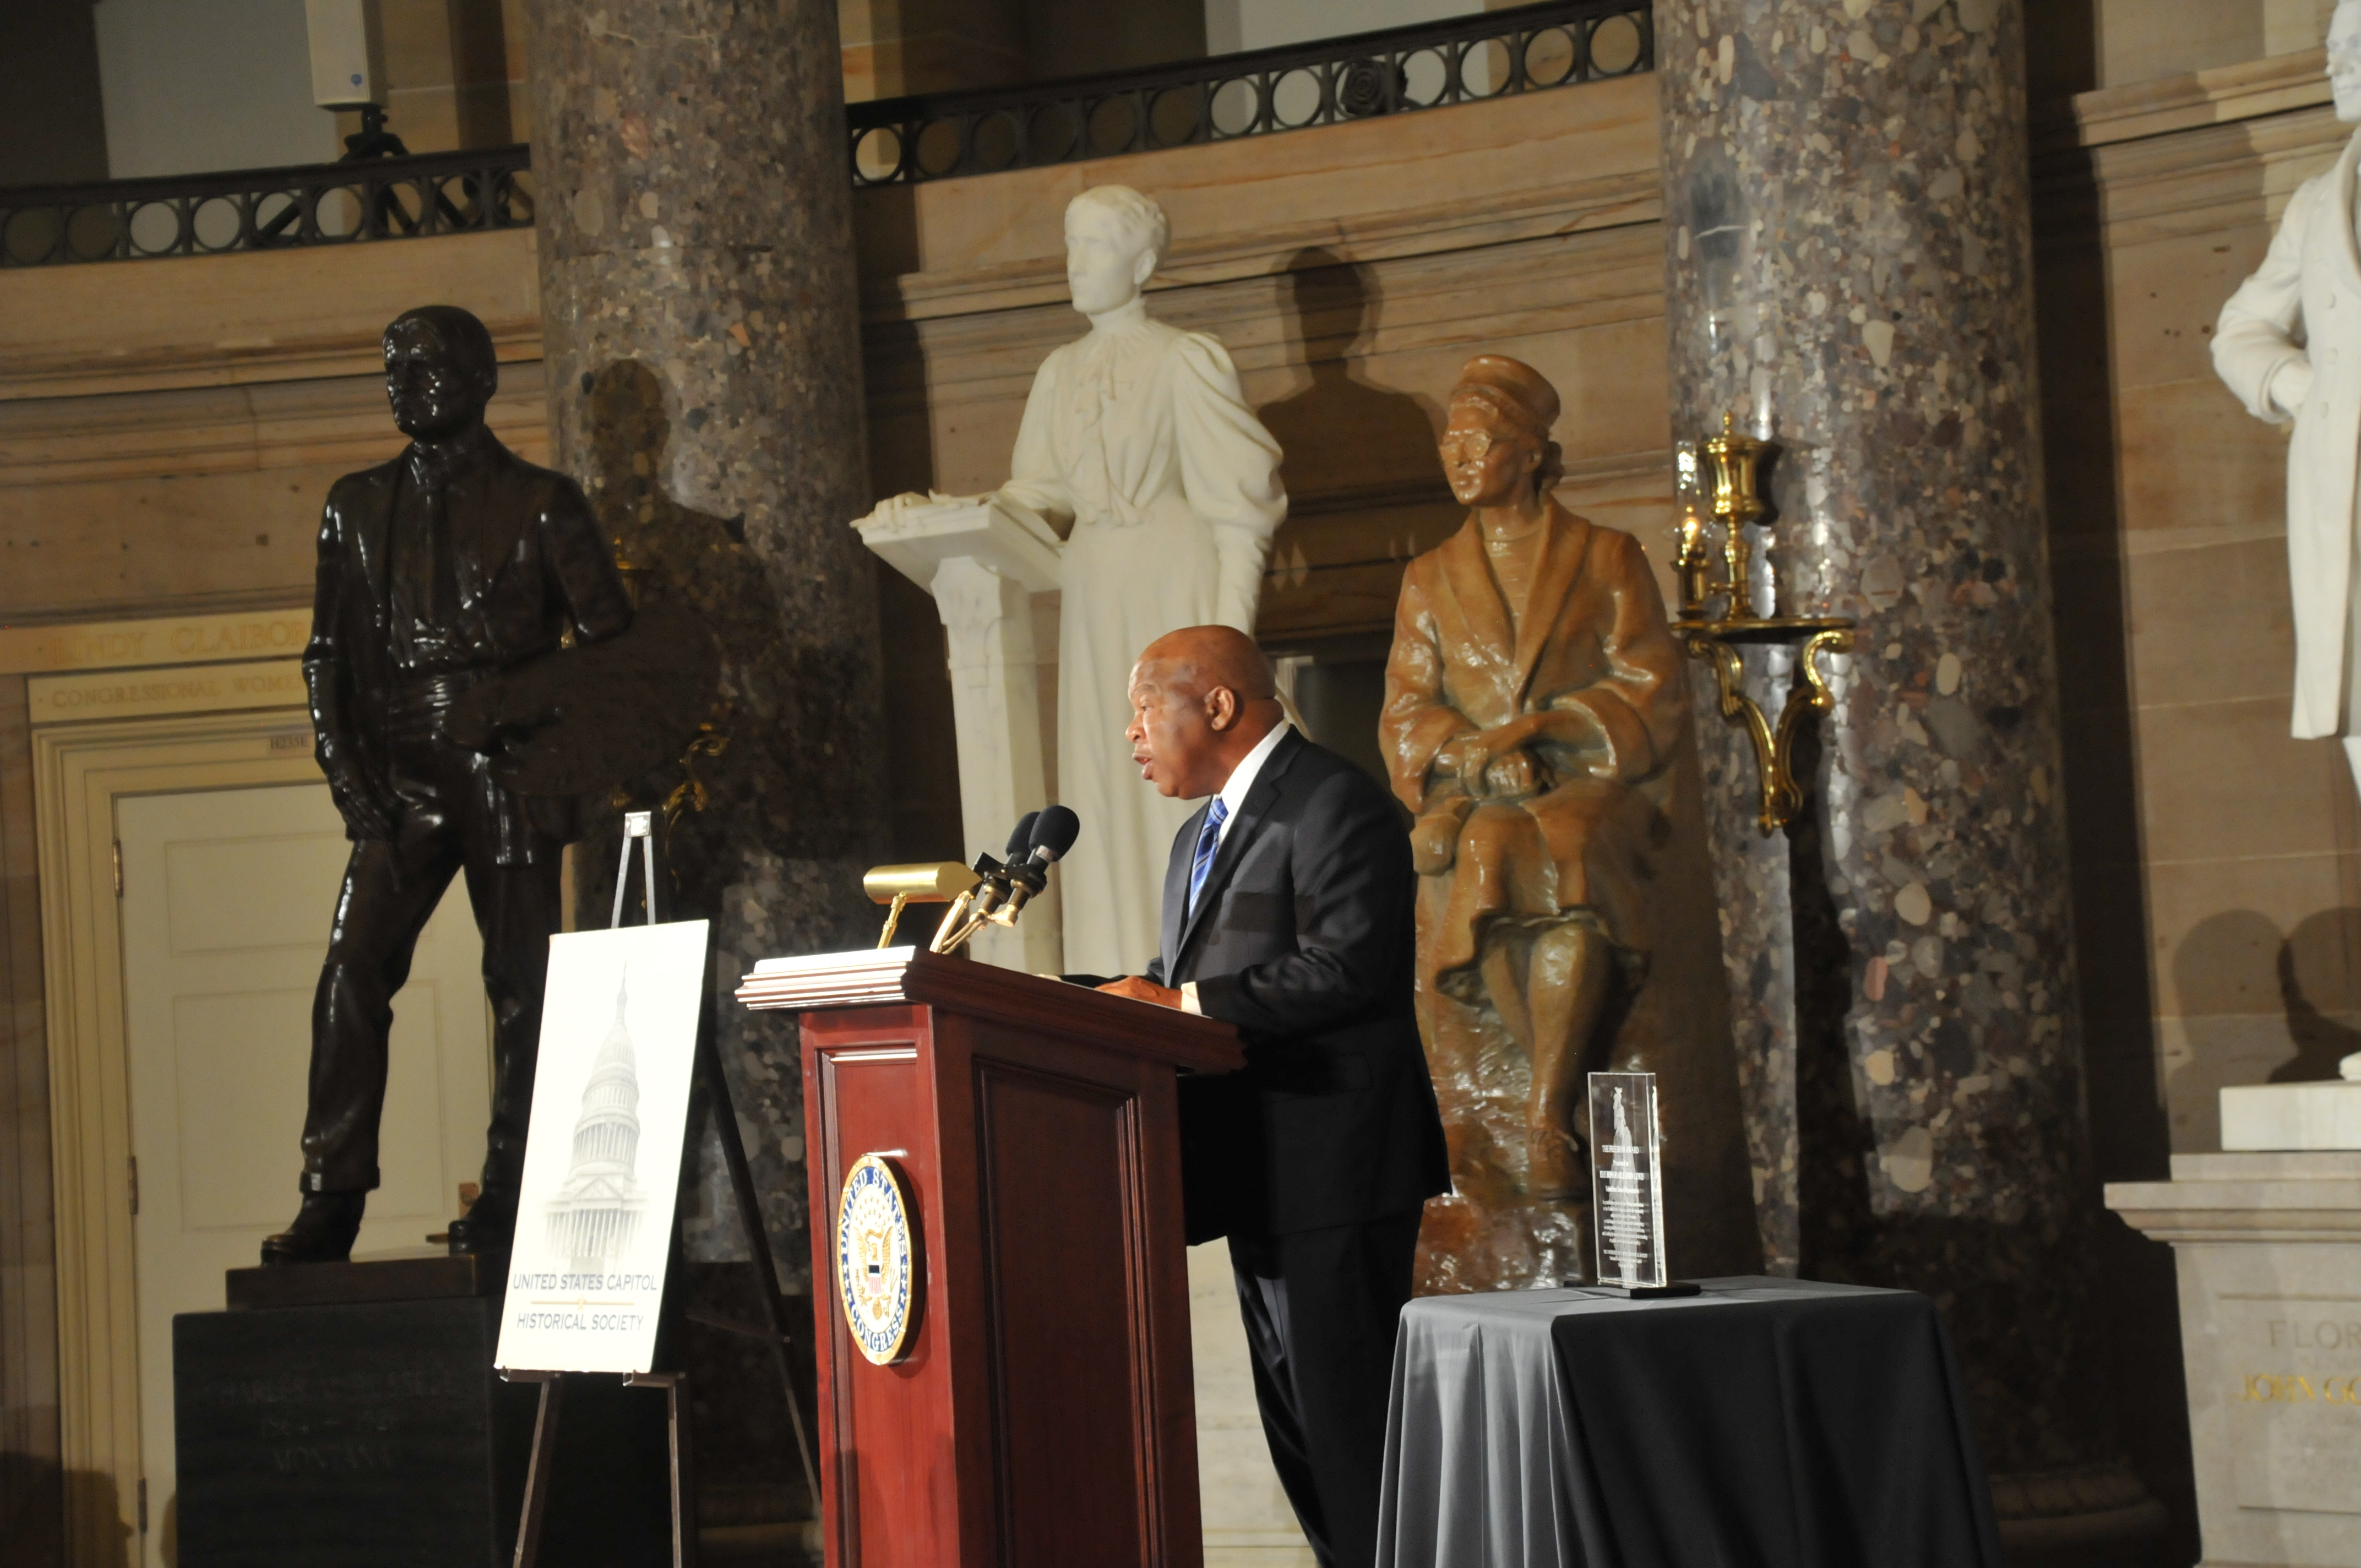 Congressman John Lewis accepts the 2014 Freedom Award